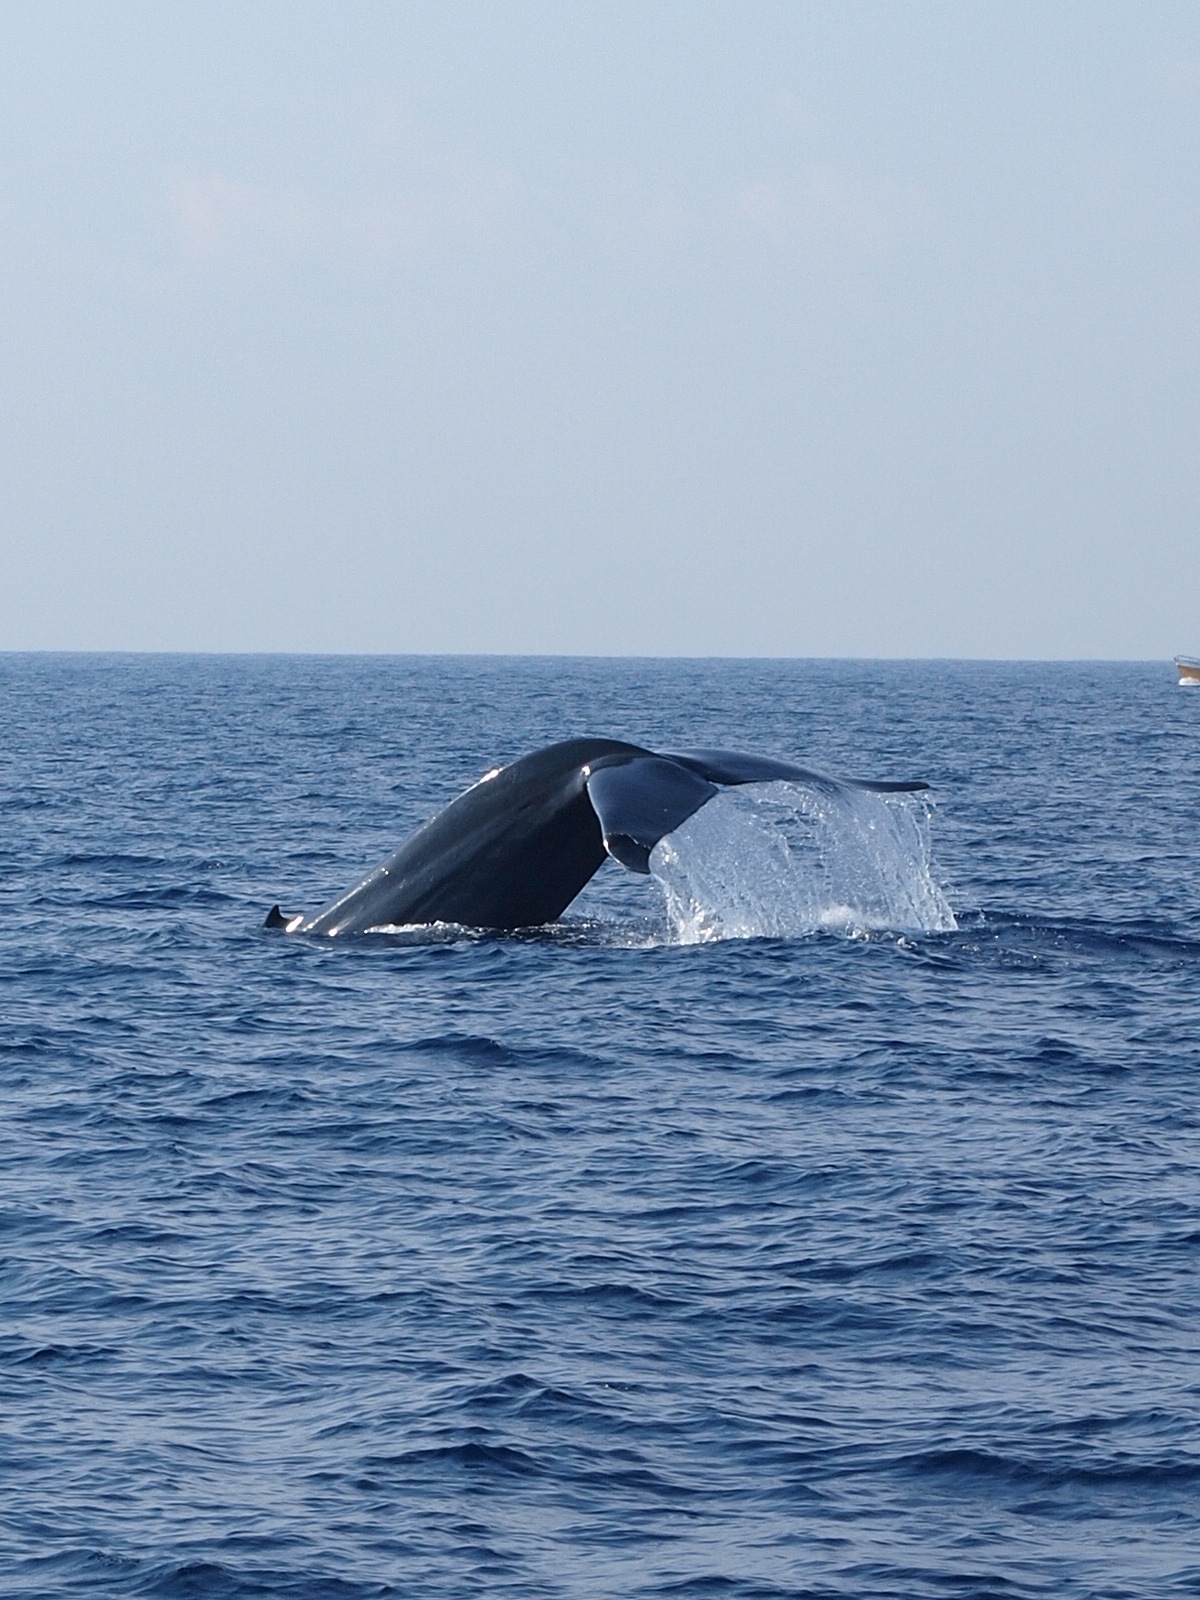 Blue whale off the coast of Sri Lanka. Photo courtesy Mark Clayden.